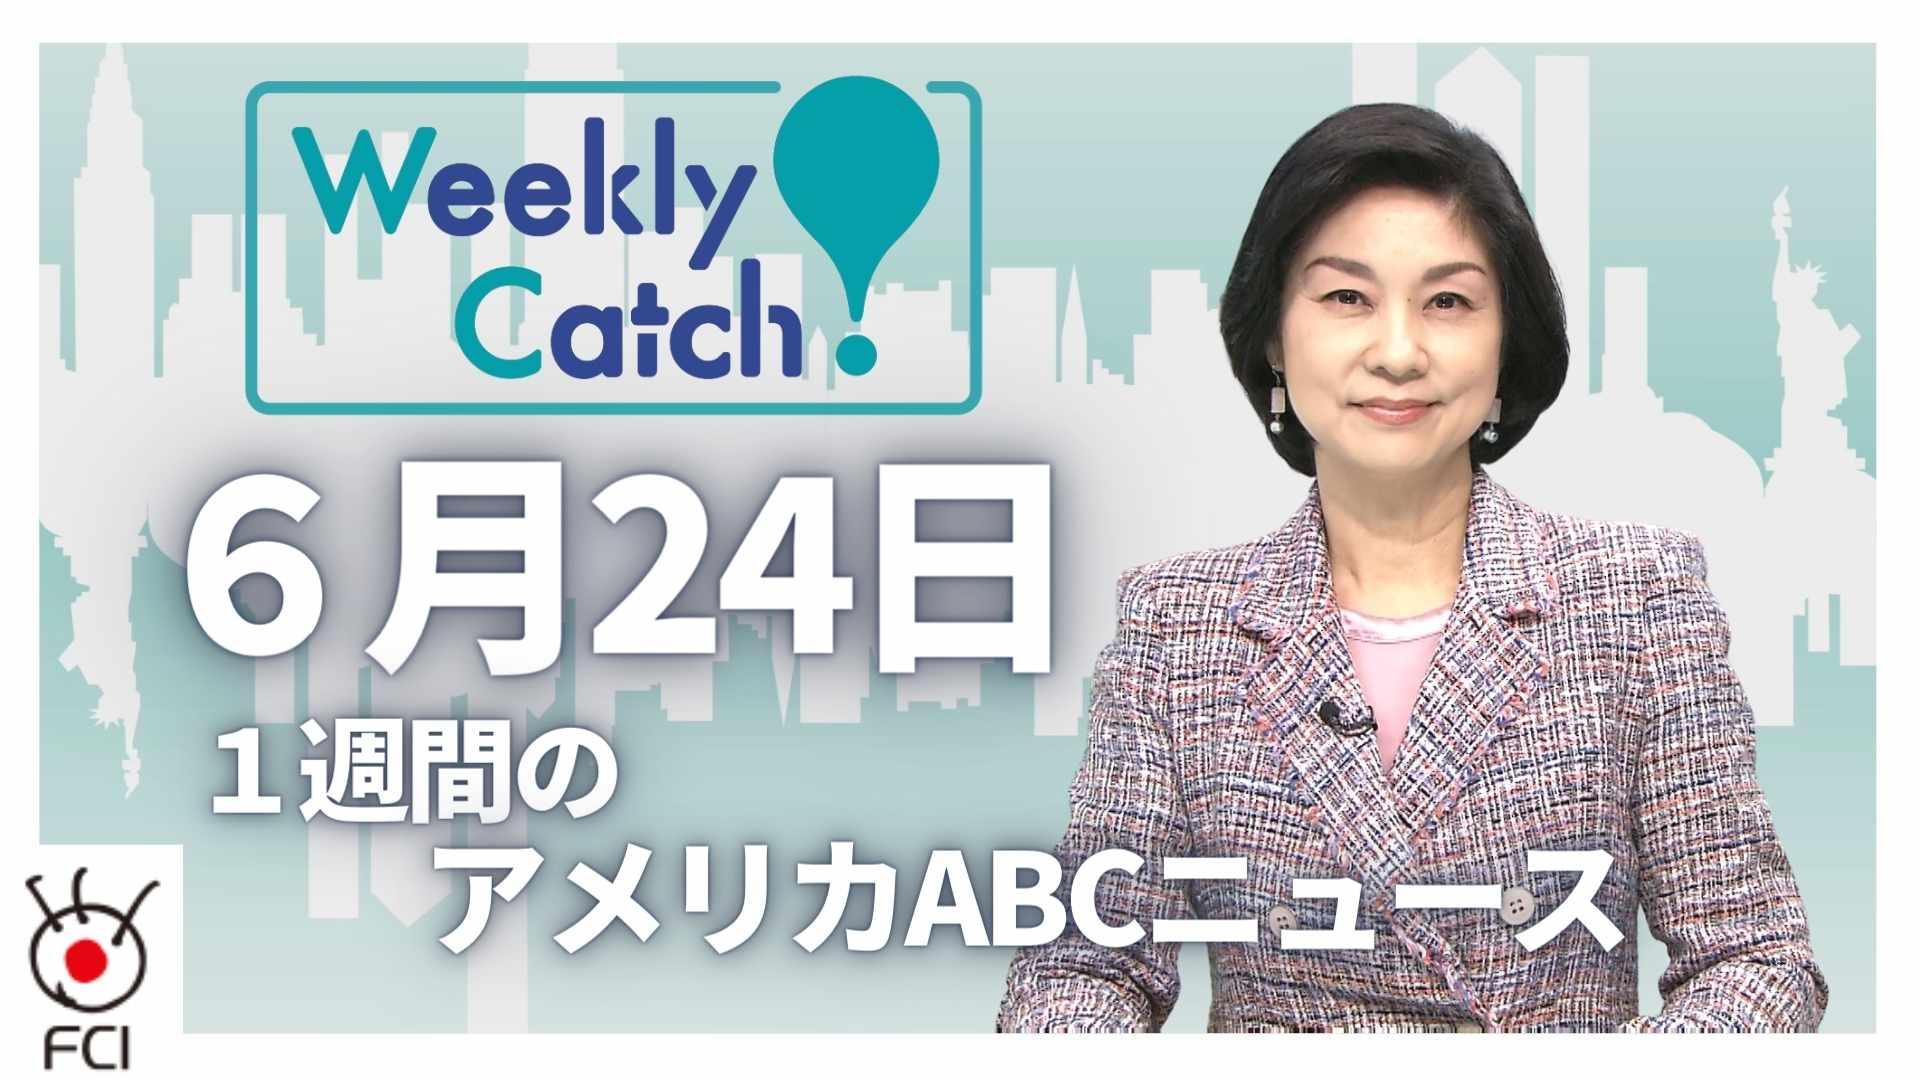 6月24 日 Weekly Catch!